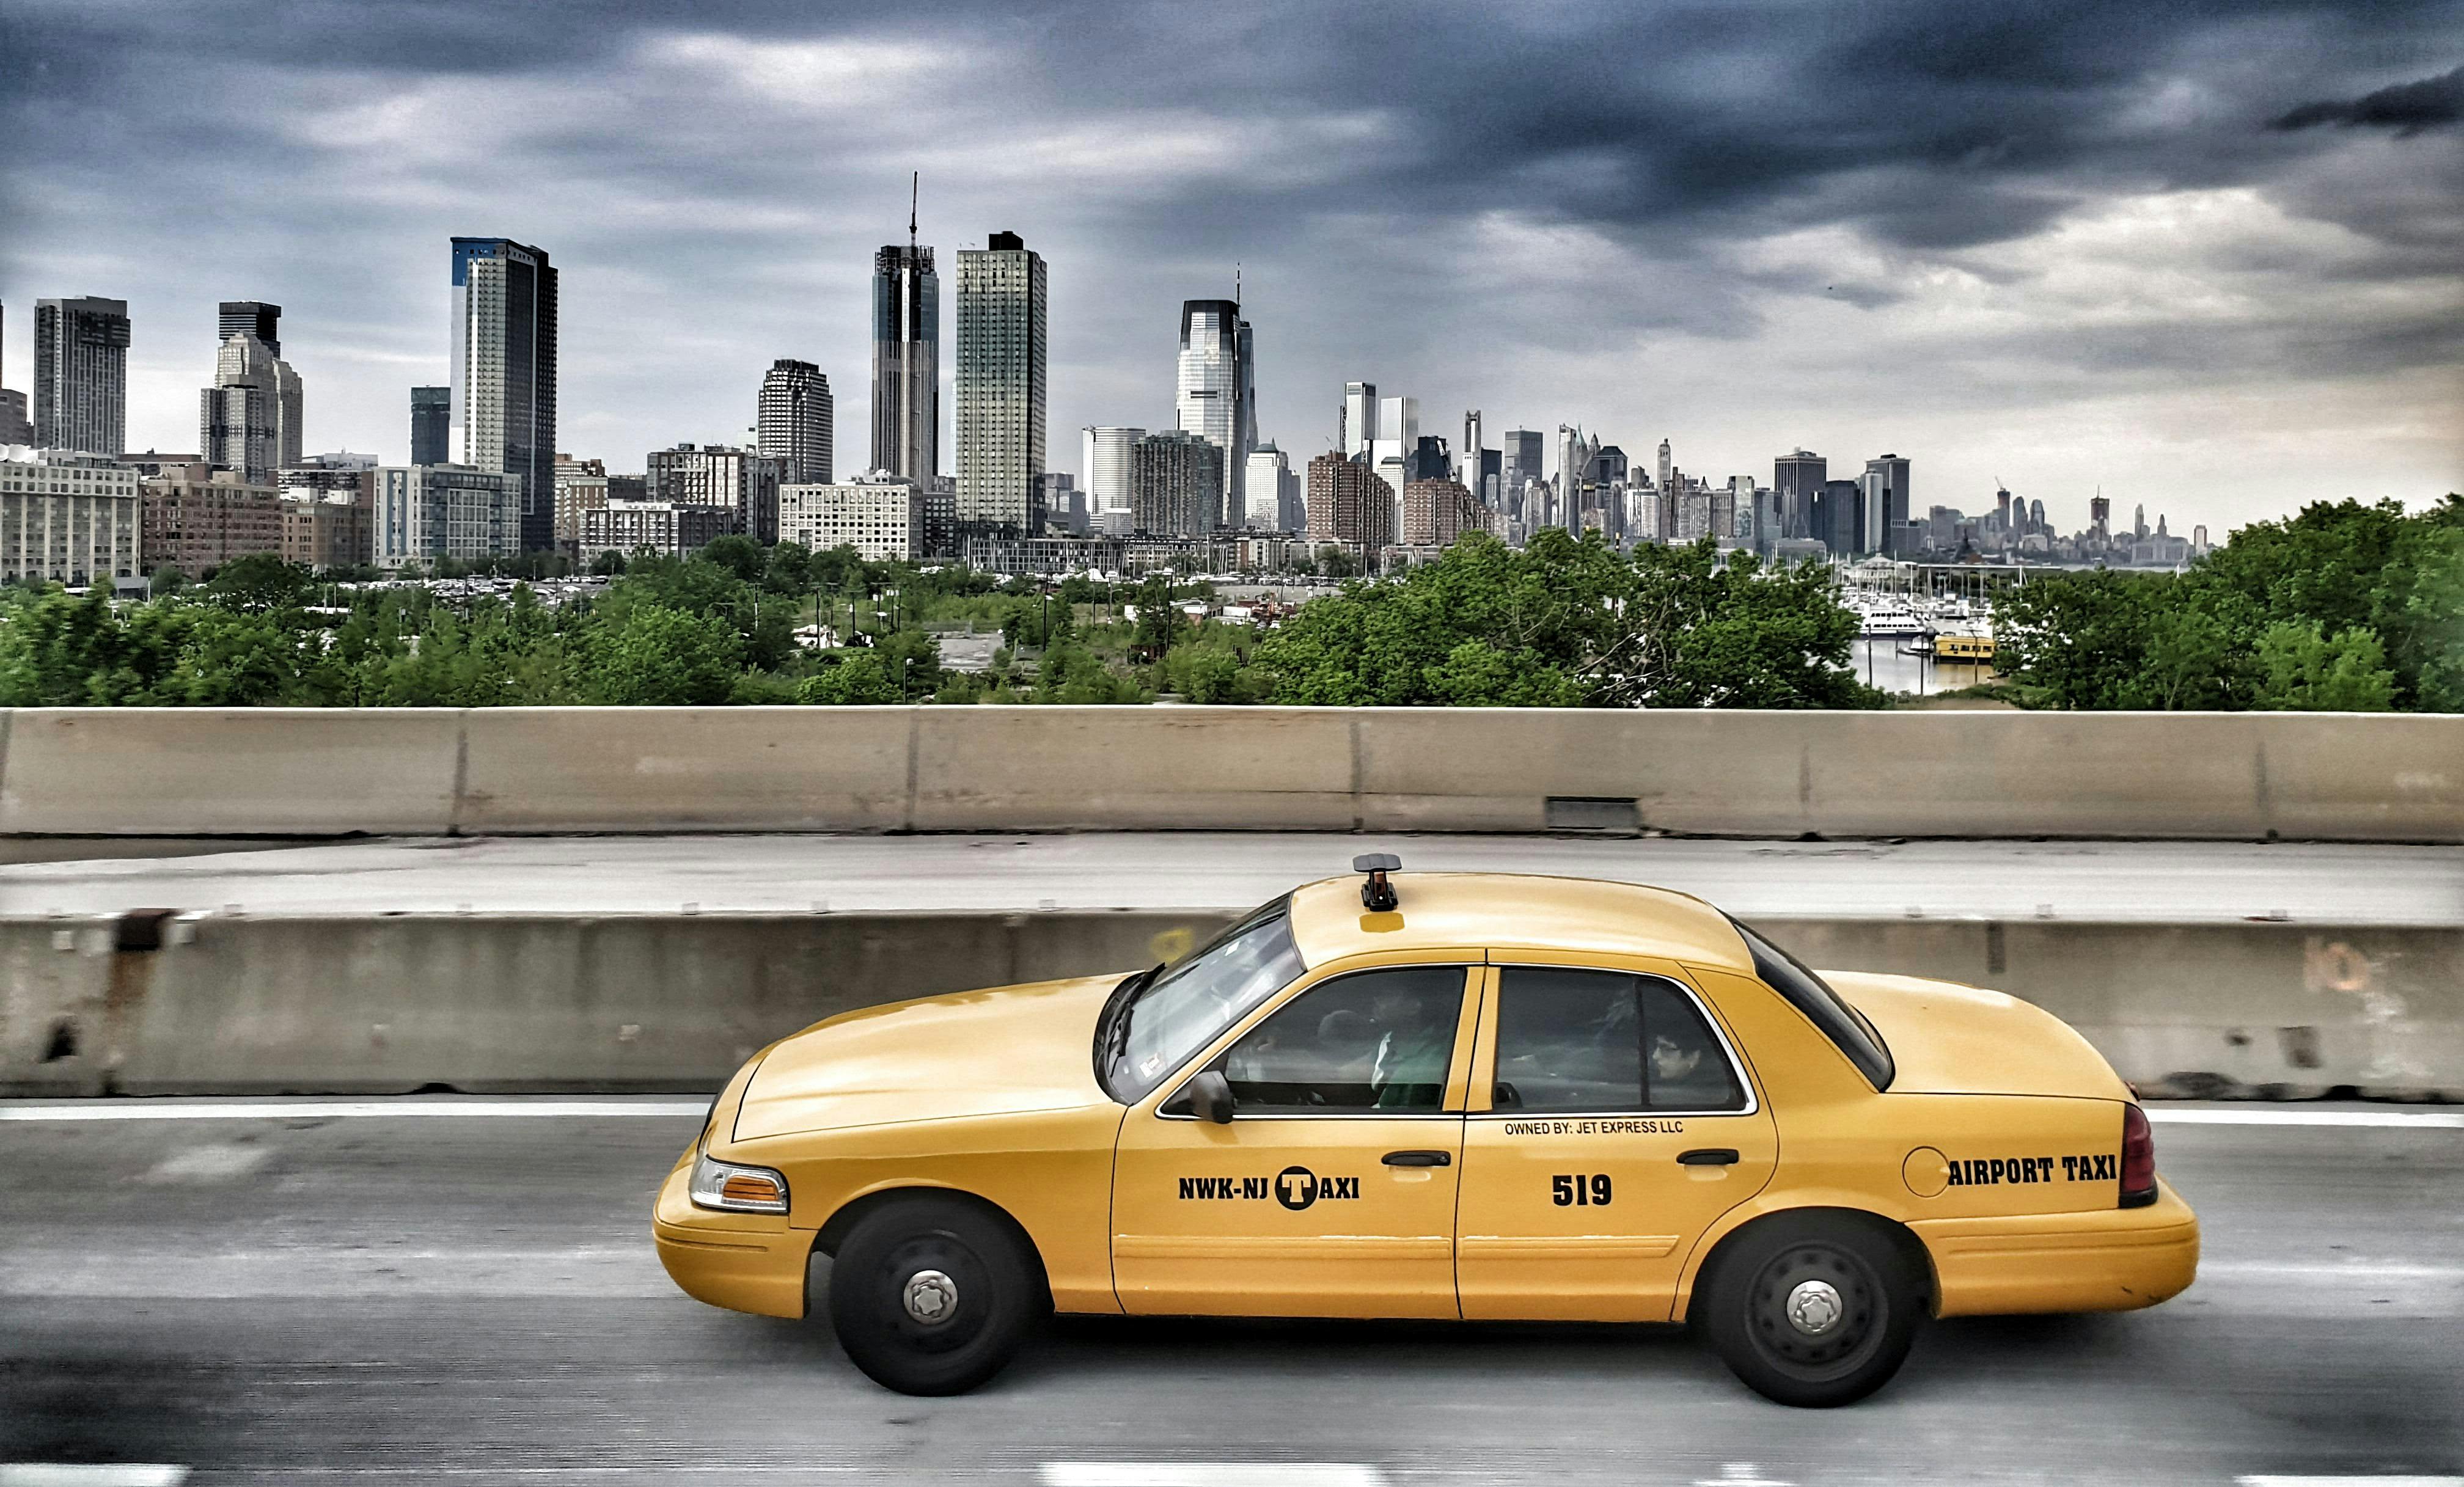 Taxi Passing Through The City \u00b7 Free Stock Photo